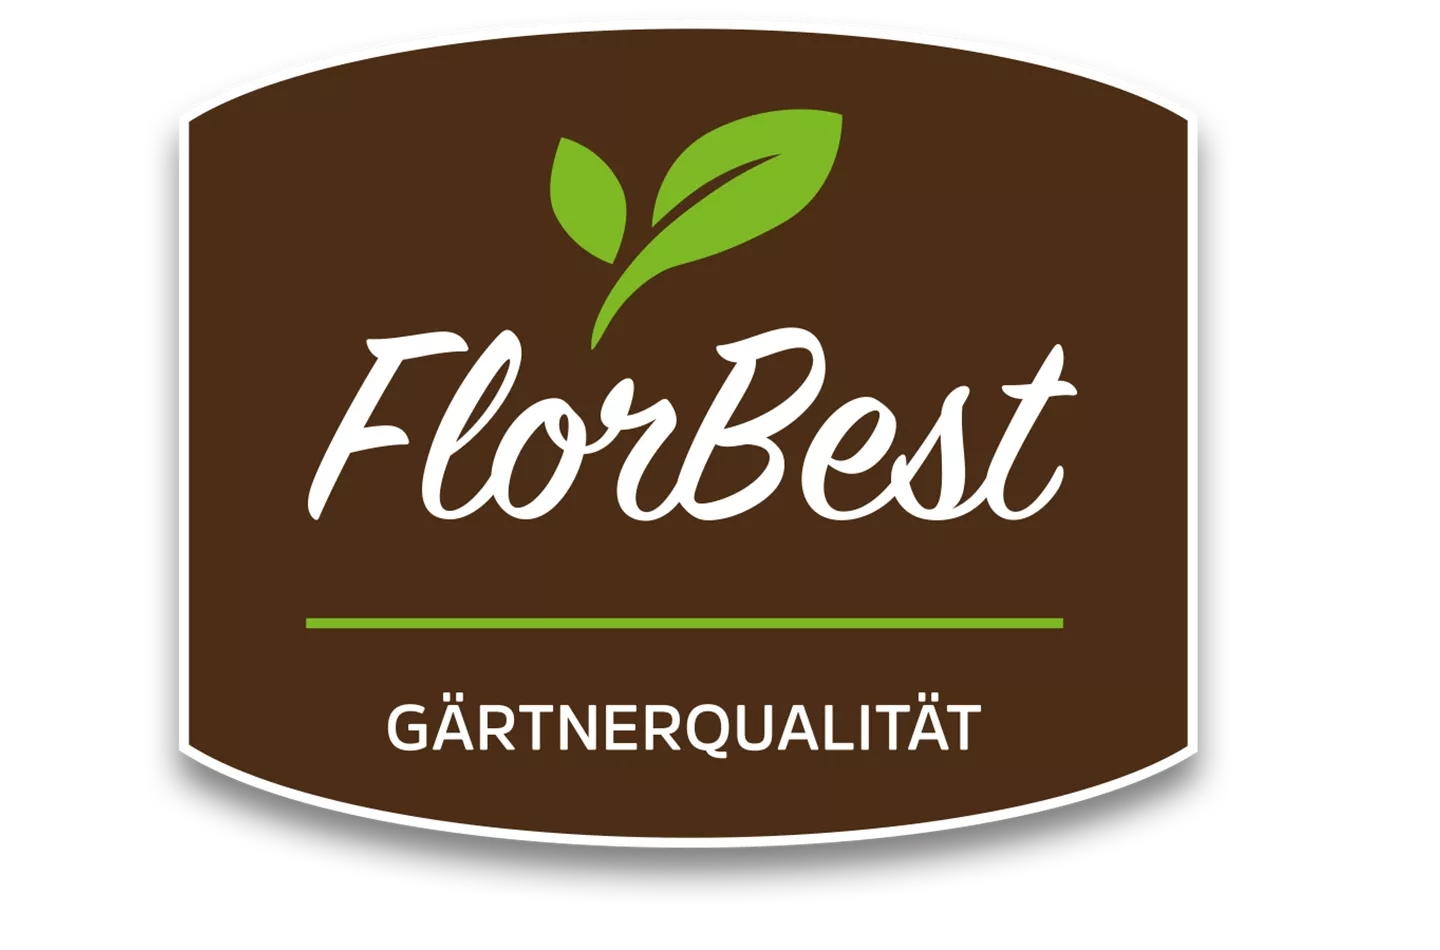 FlorBest